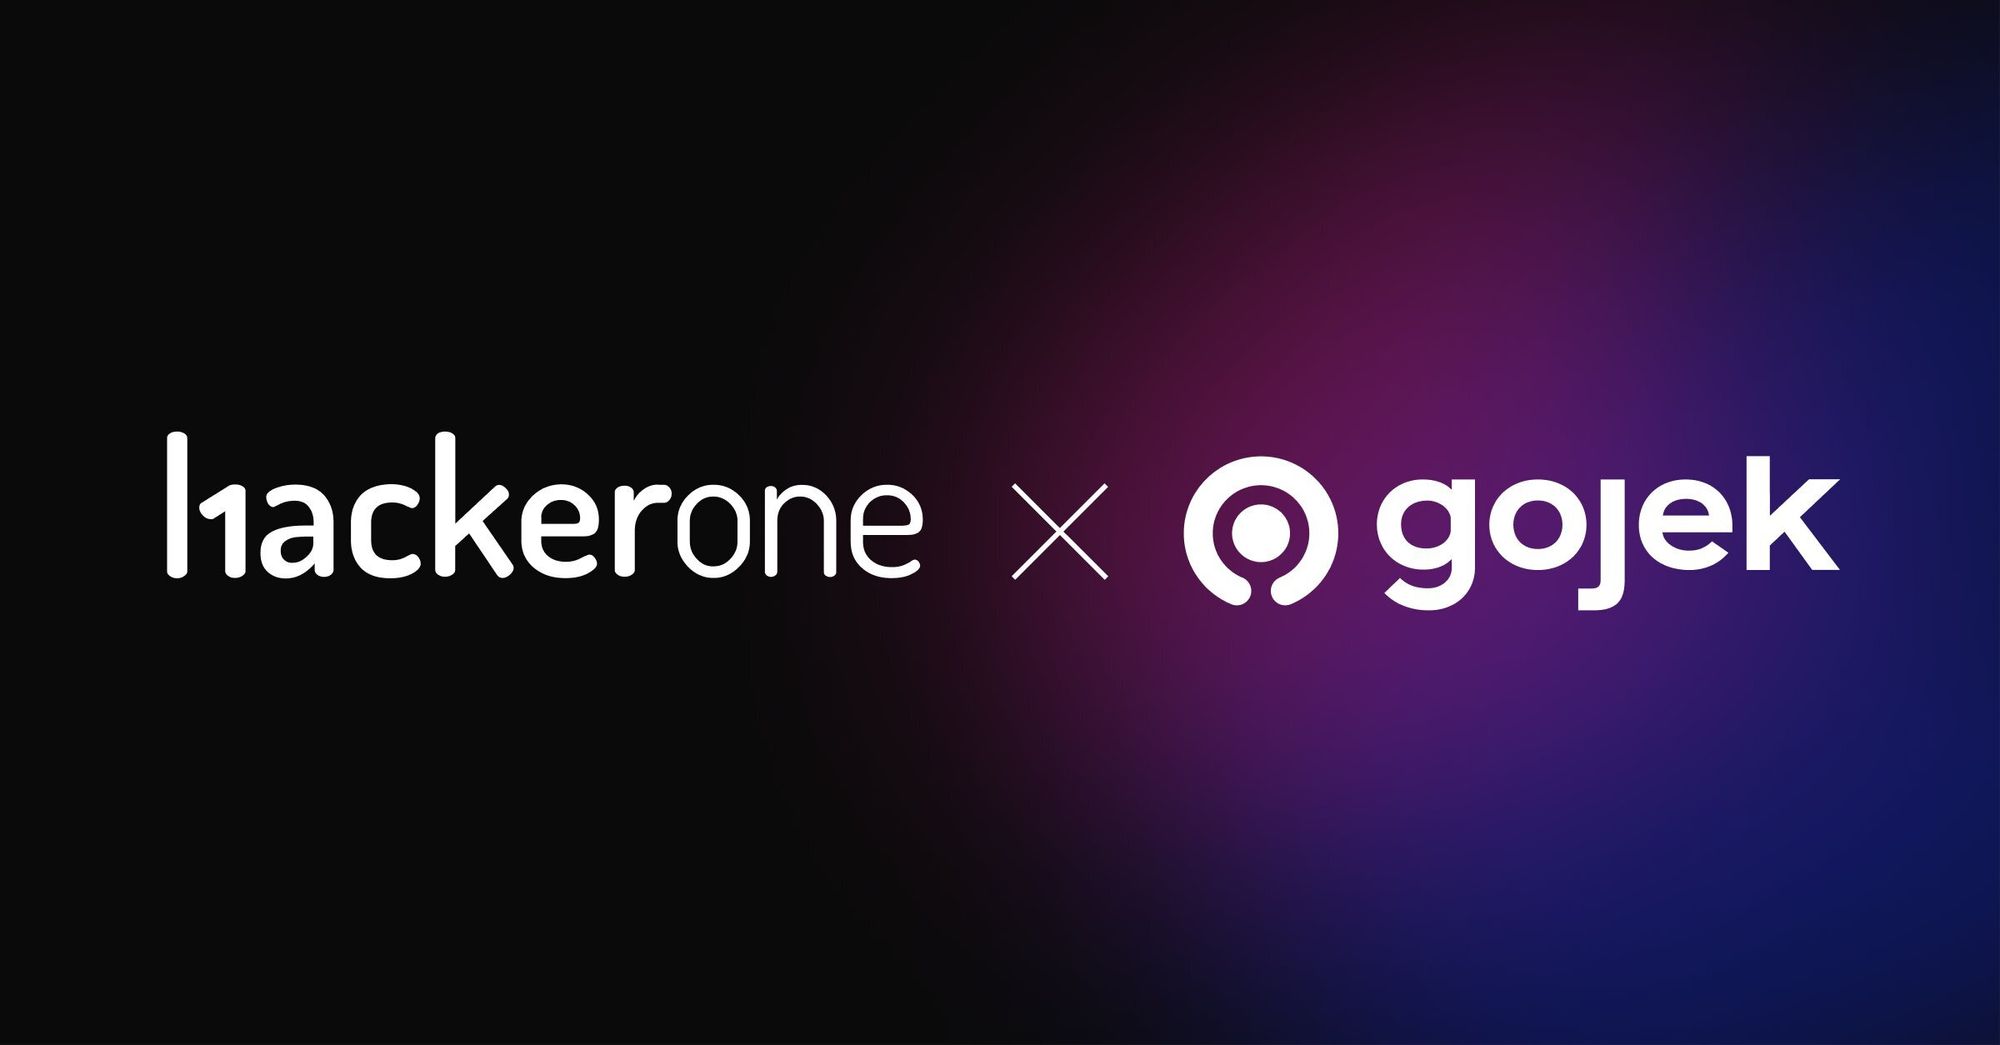 Gojek launches its public bug bounty program on HackerOne